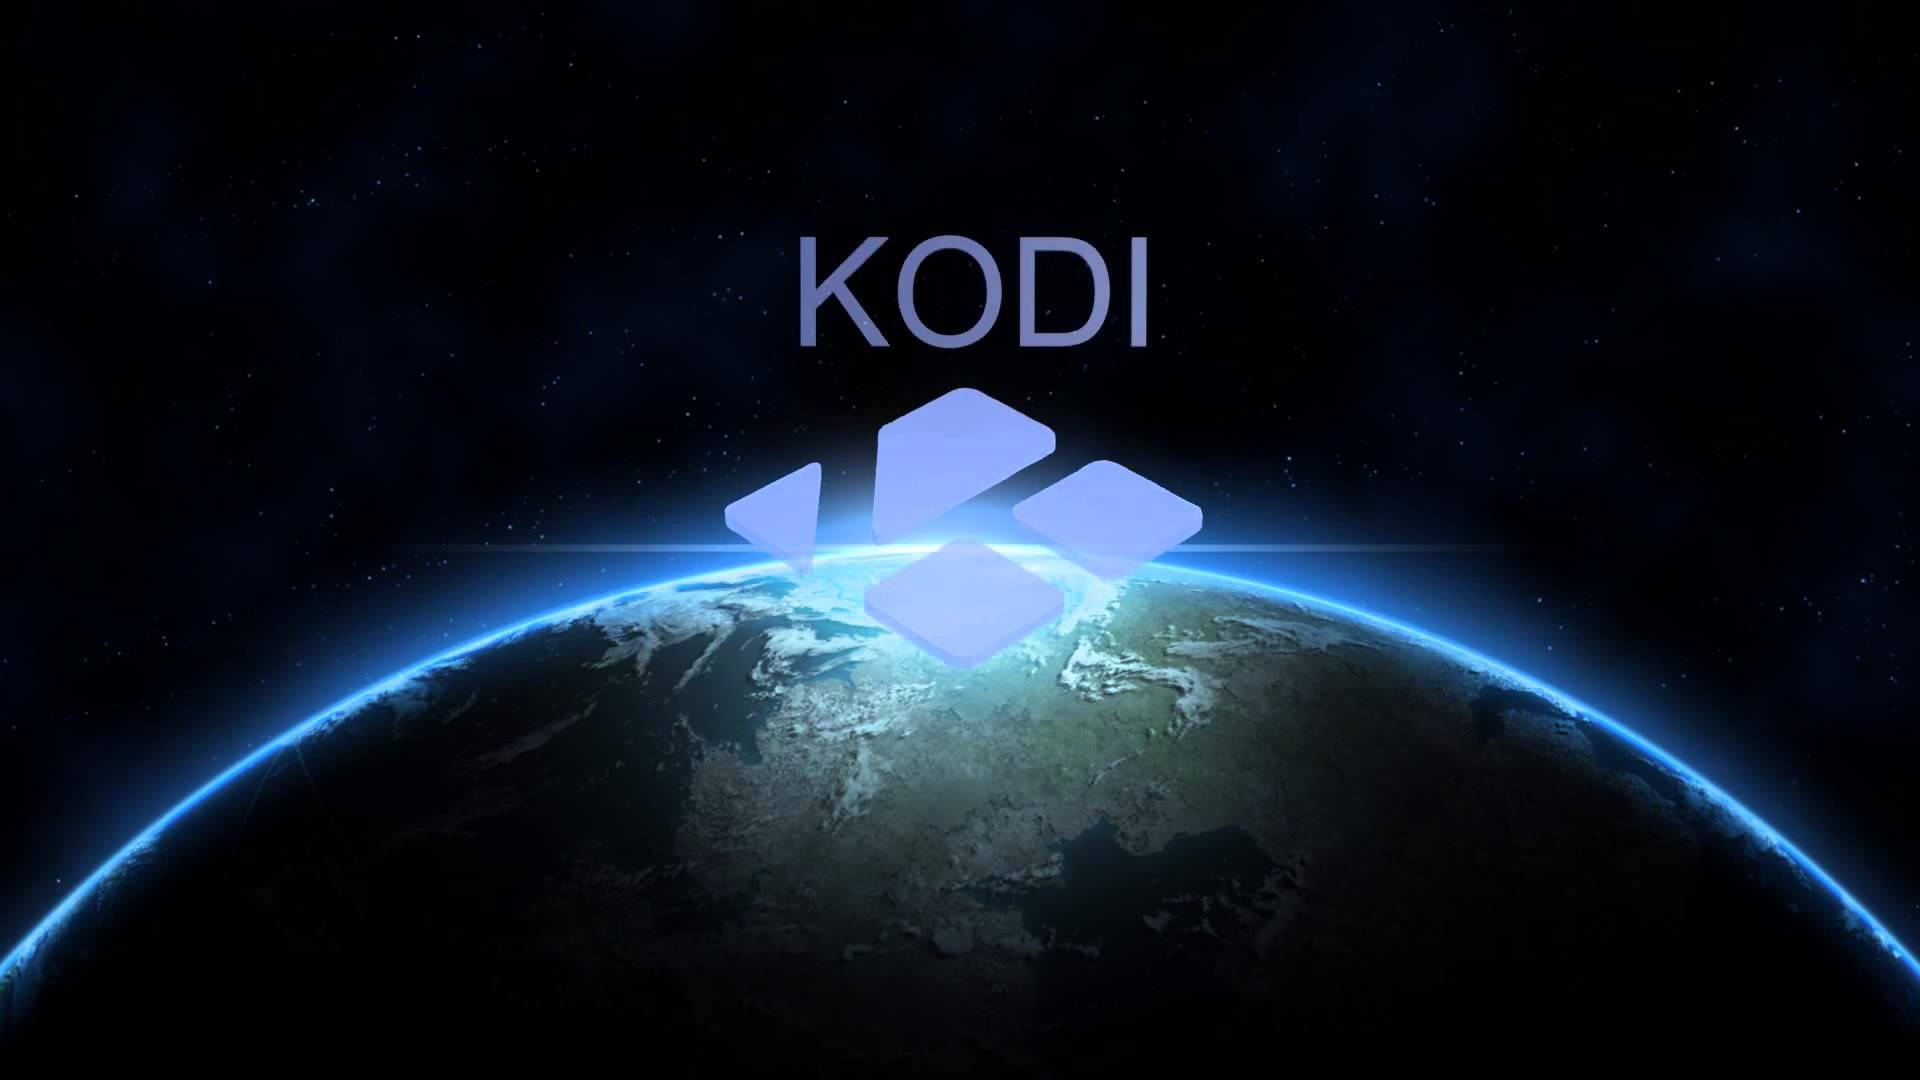 Kodi Logo Over Planet Hd Wallpaper